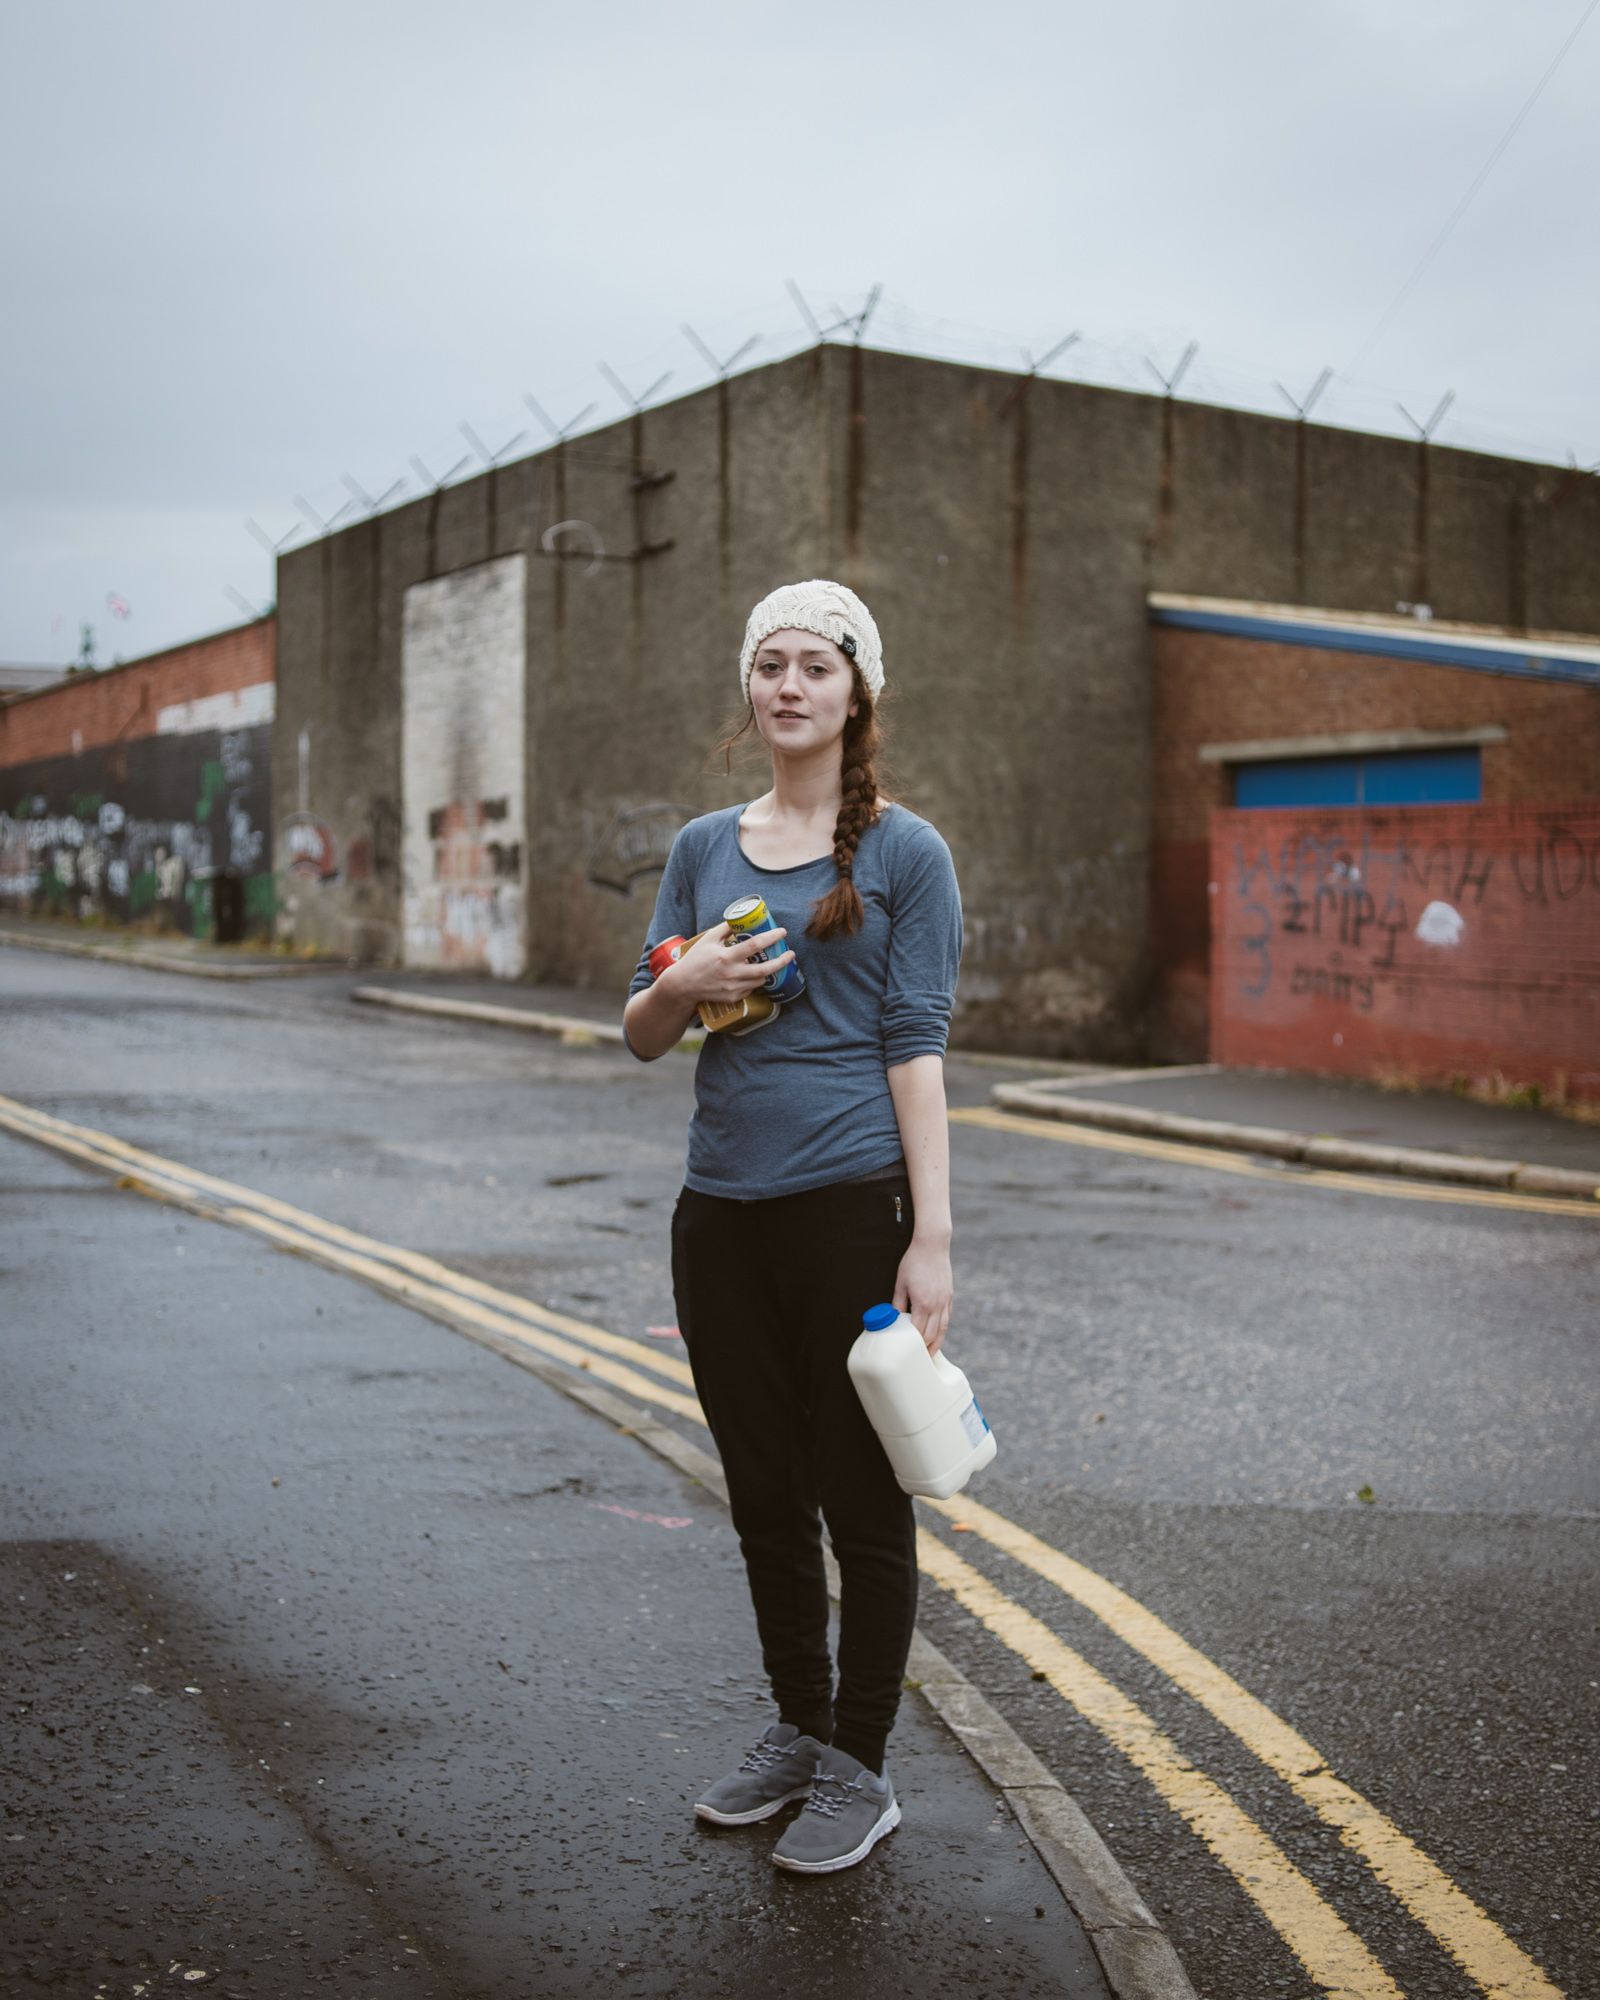 © Jens Schwarz - Heidi with goods in her hands, Catholic Irish Republican Carrick Hill area, Belfast, Northern Ireland 07/2017